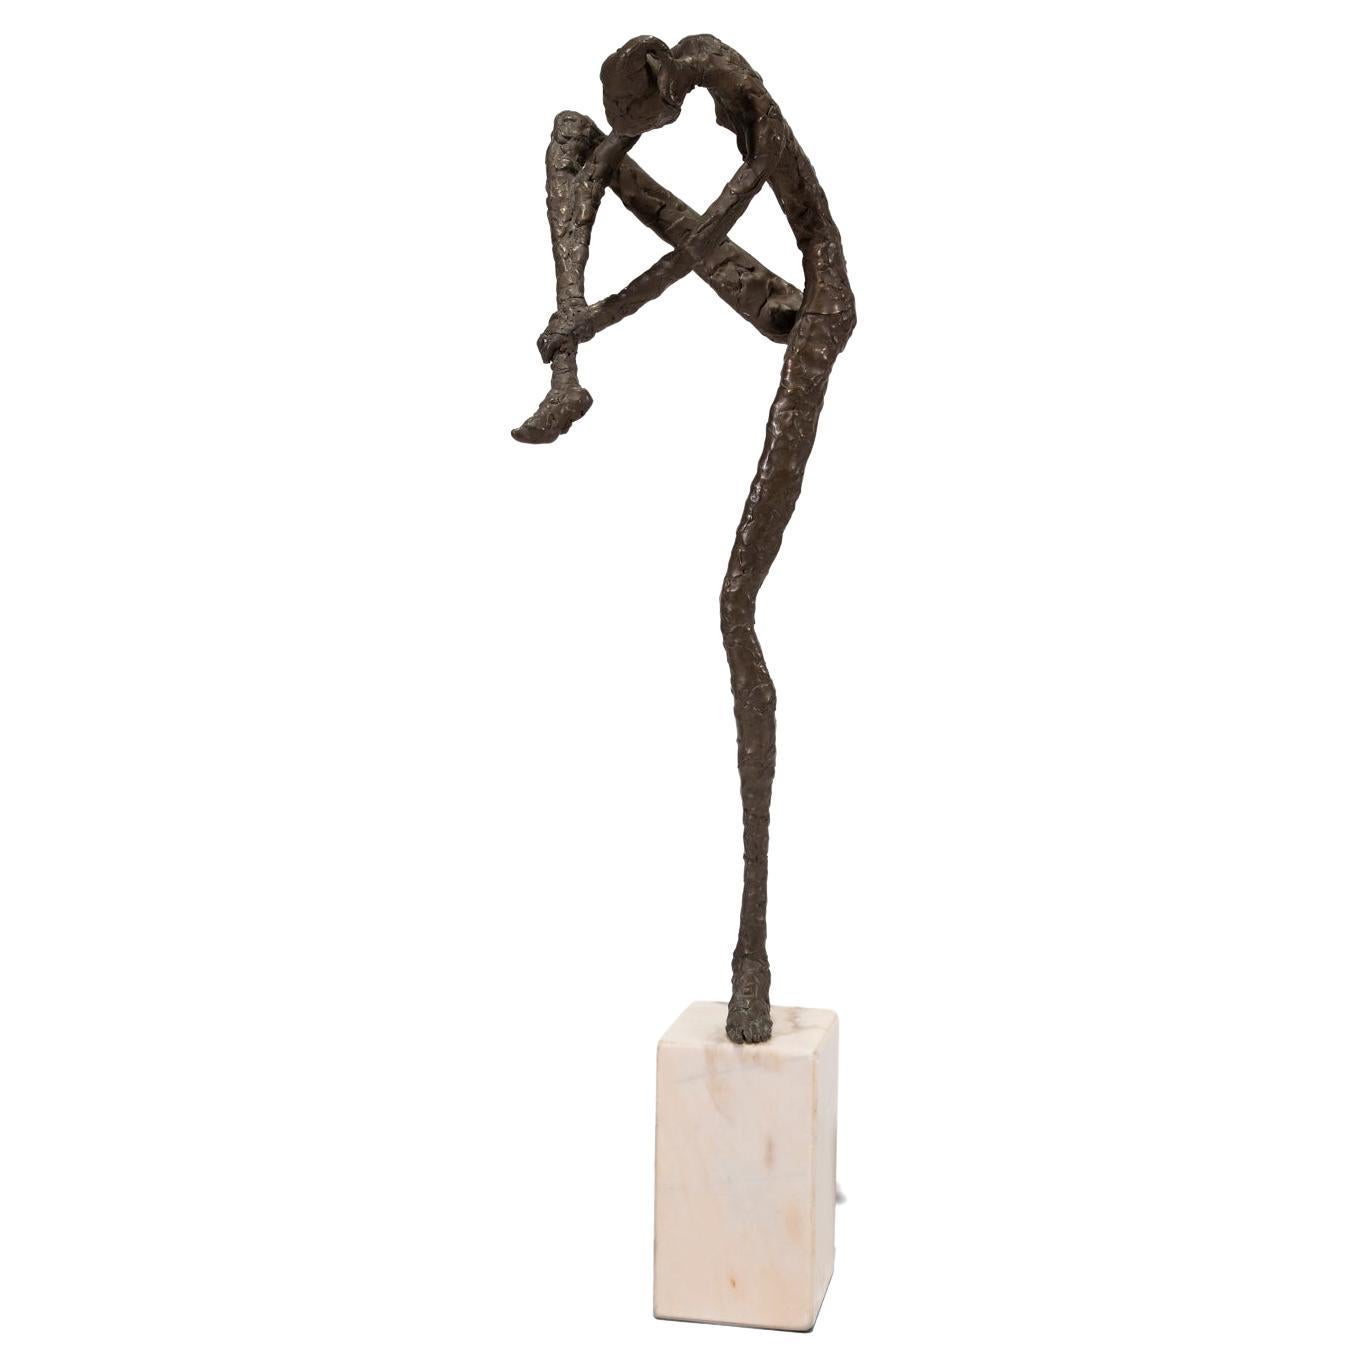 Tom Brun Bronze Sculpture "BALLERINA" Classical Dancer